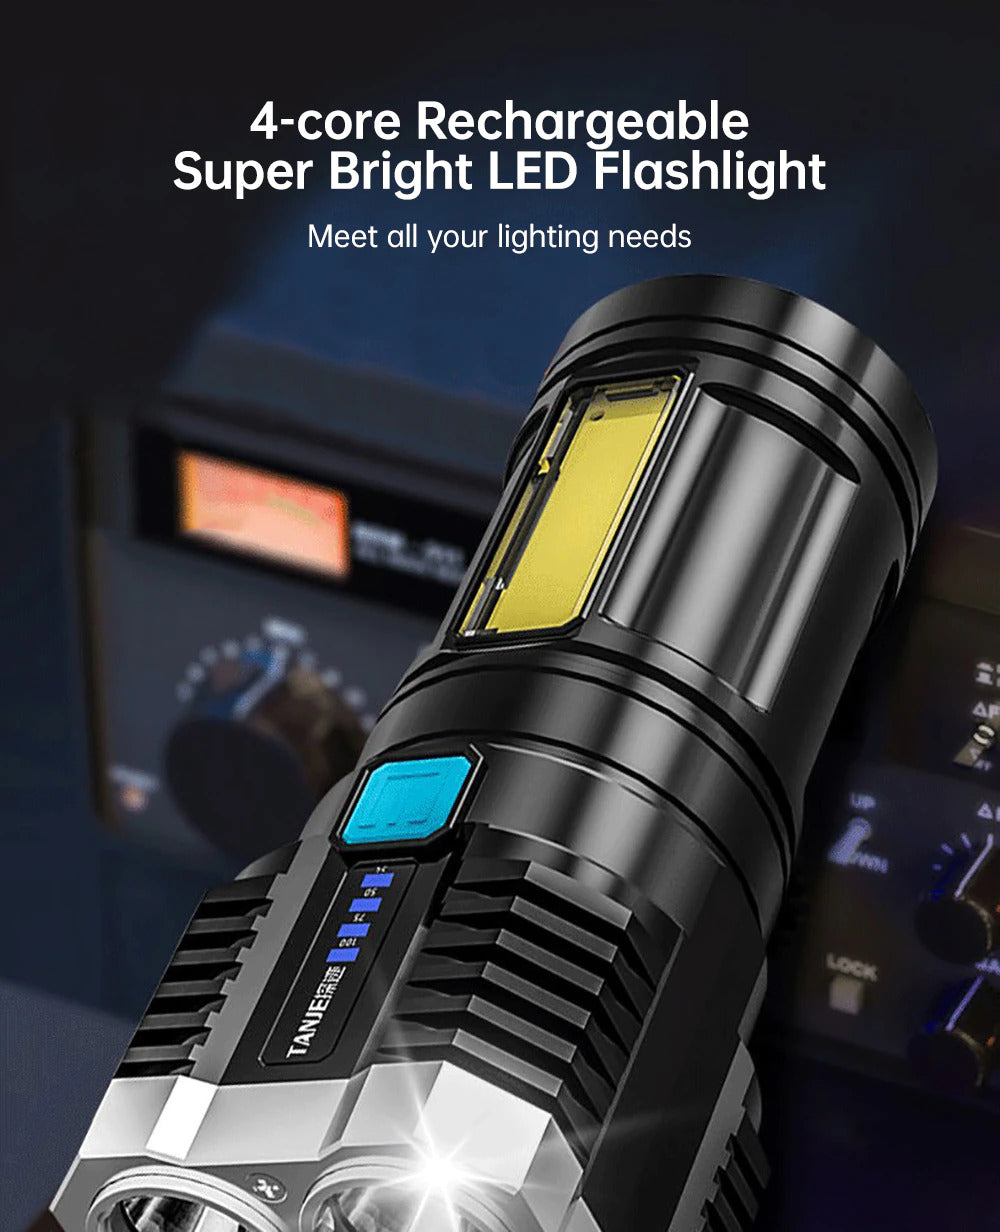 Rechargeable LED FlashlighT